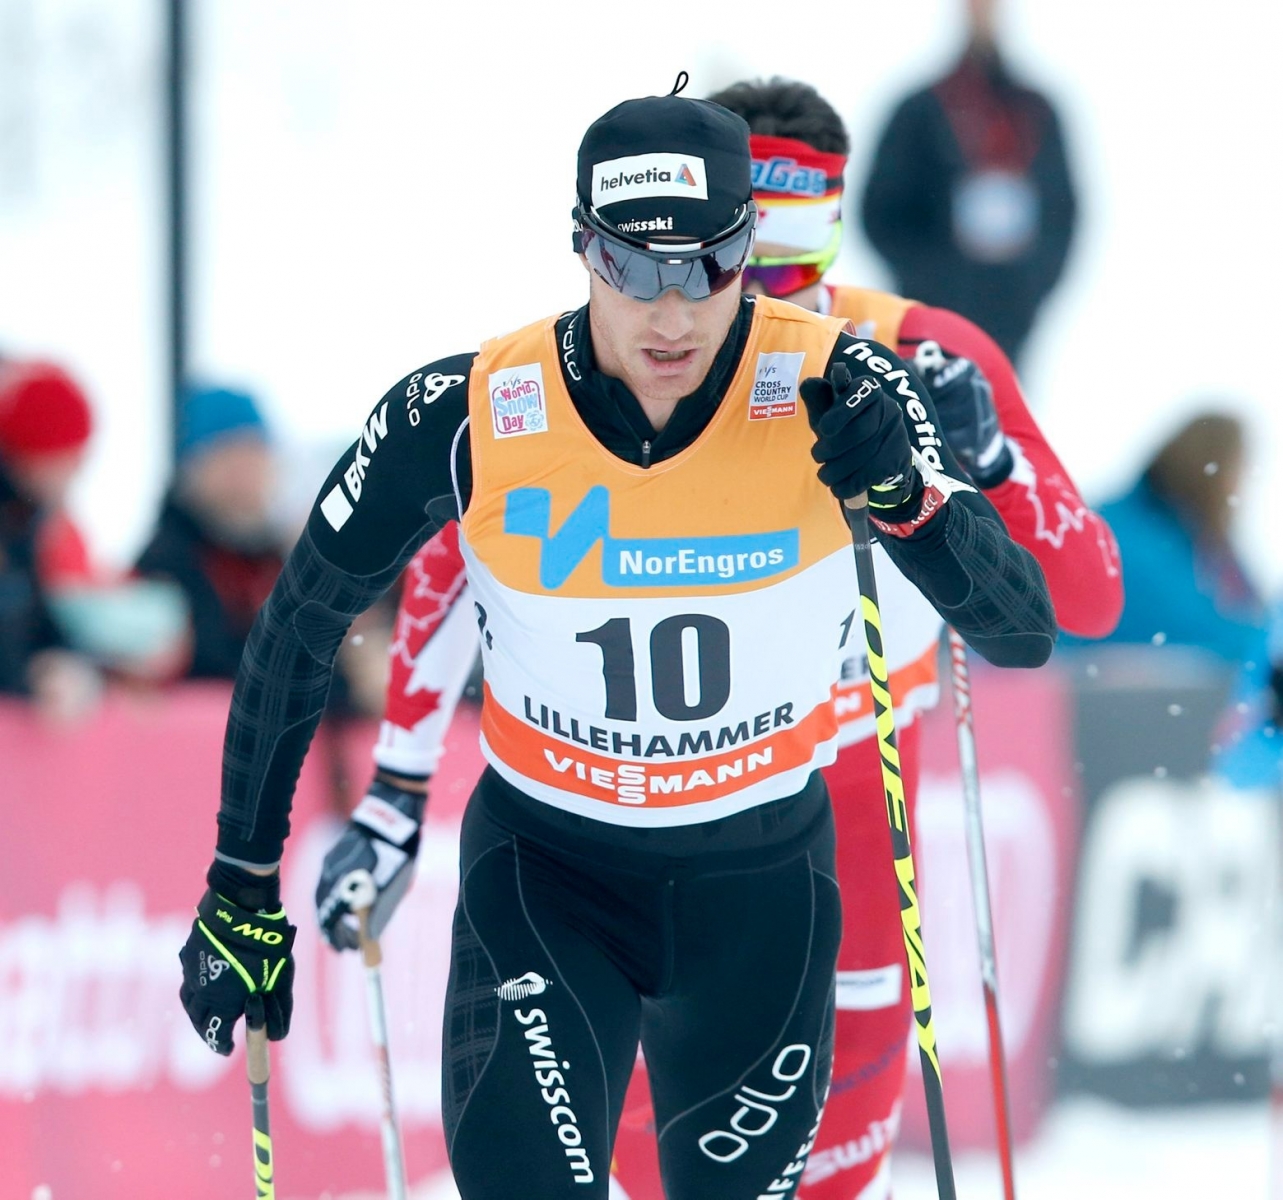 Dario Cologna of Switzerland in action during the World Cup Skiathlon 30km event in Lillehammer, Norway Saturday, Dec. 5, 2015. (Terje Pedersen/NTB scanpix via AP)  NORWAY OUT  Norway World Cup Skiathlon